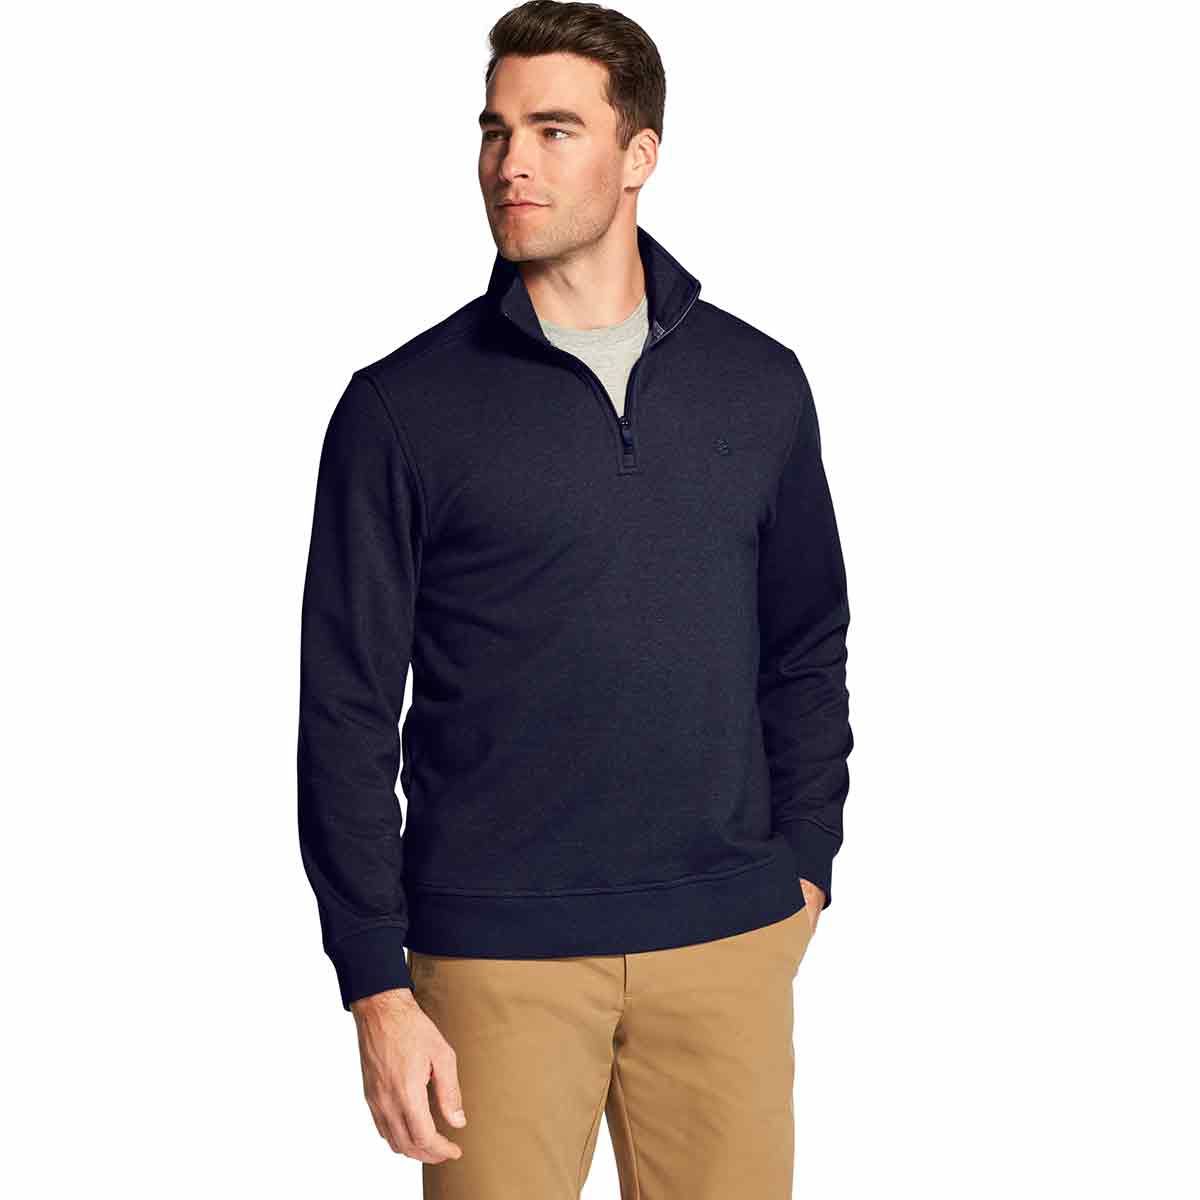 Izod Men's Advantage Performance Stretch Quarter Zip Fleece Pullover - Blue, XL